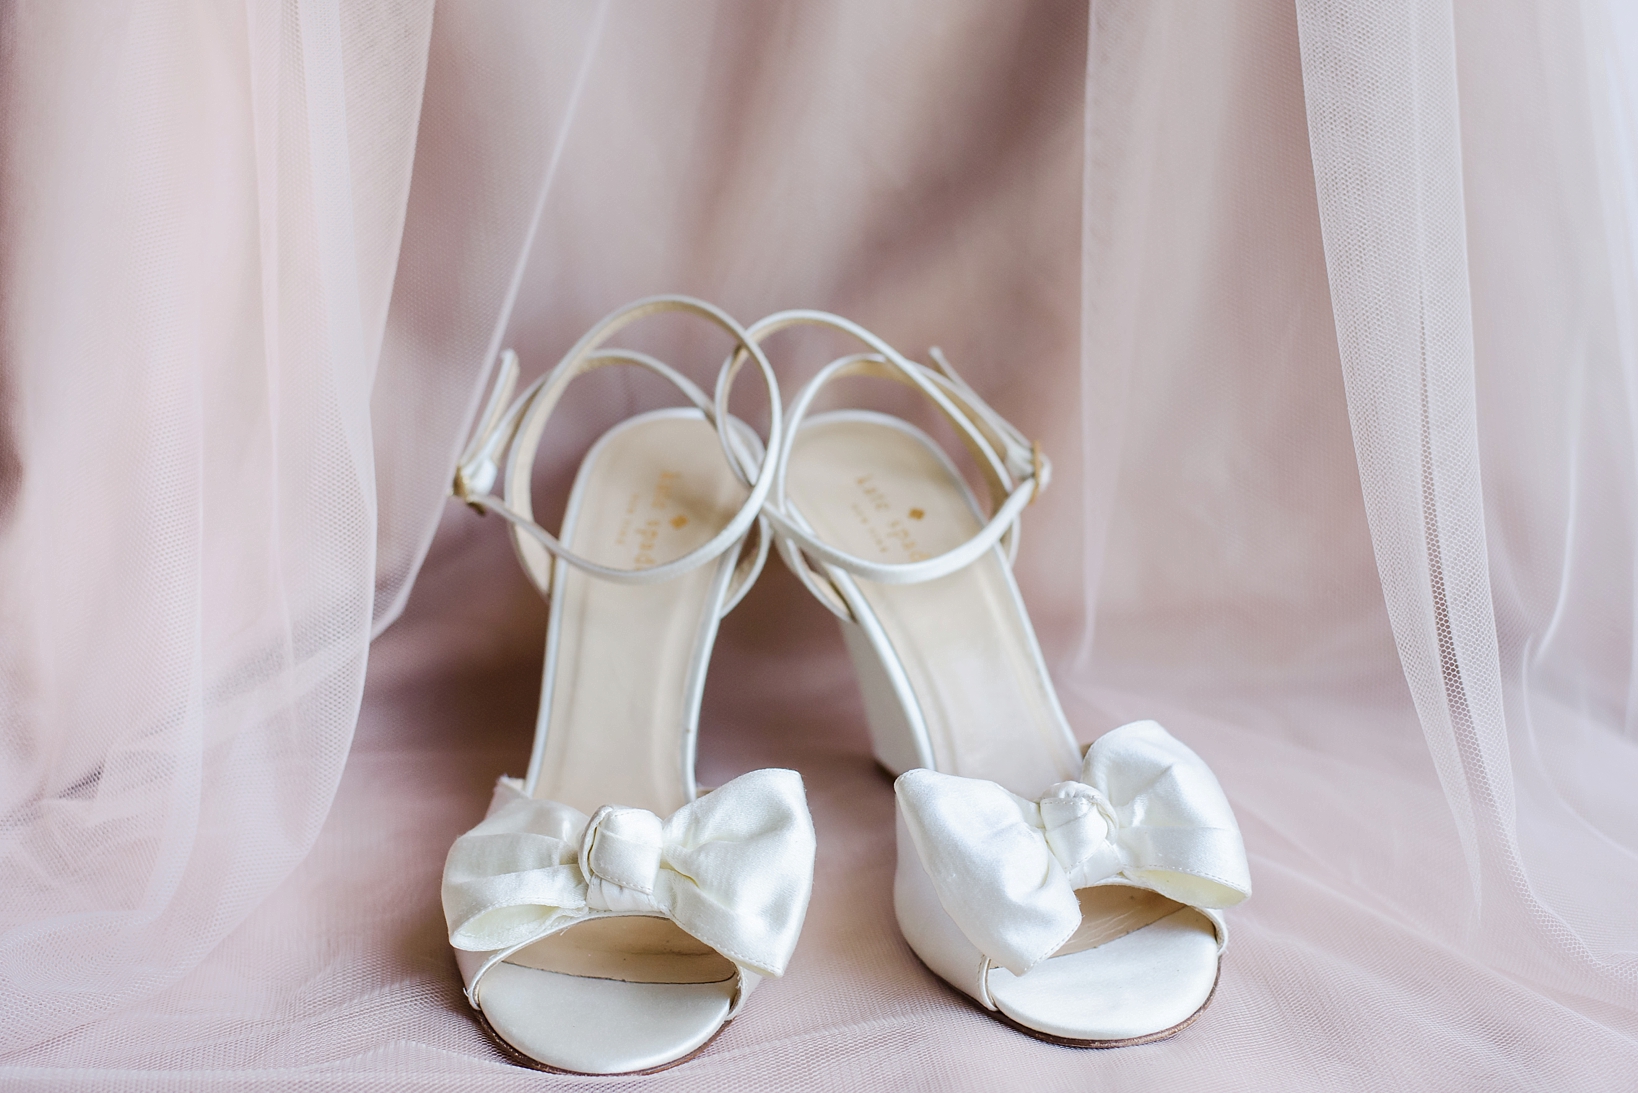 Kate Spade bridal shoes against a blush gown